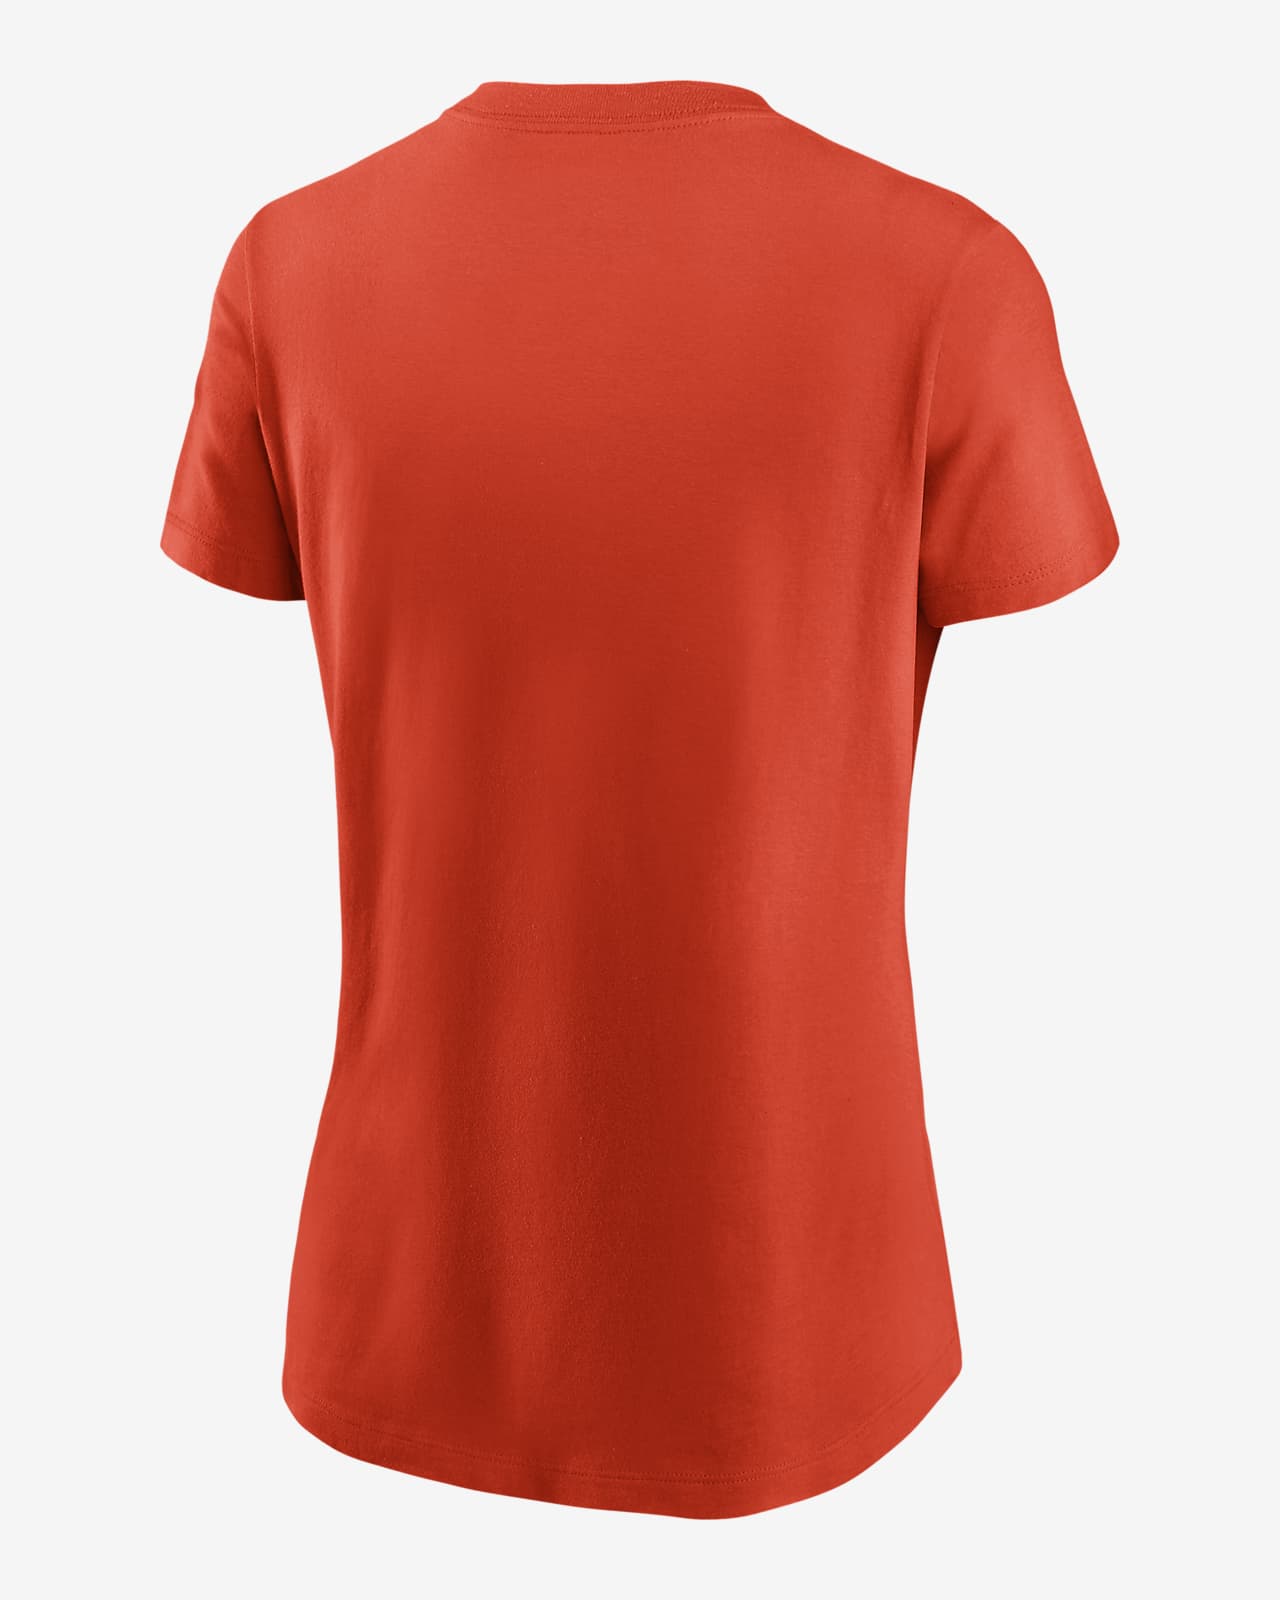 Nike City Connect Wordmark (MLB San Francisco Giants) Men's T-Shirt